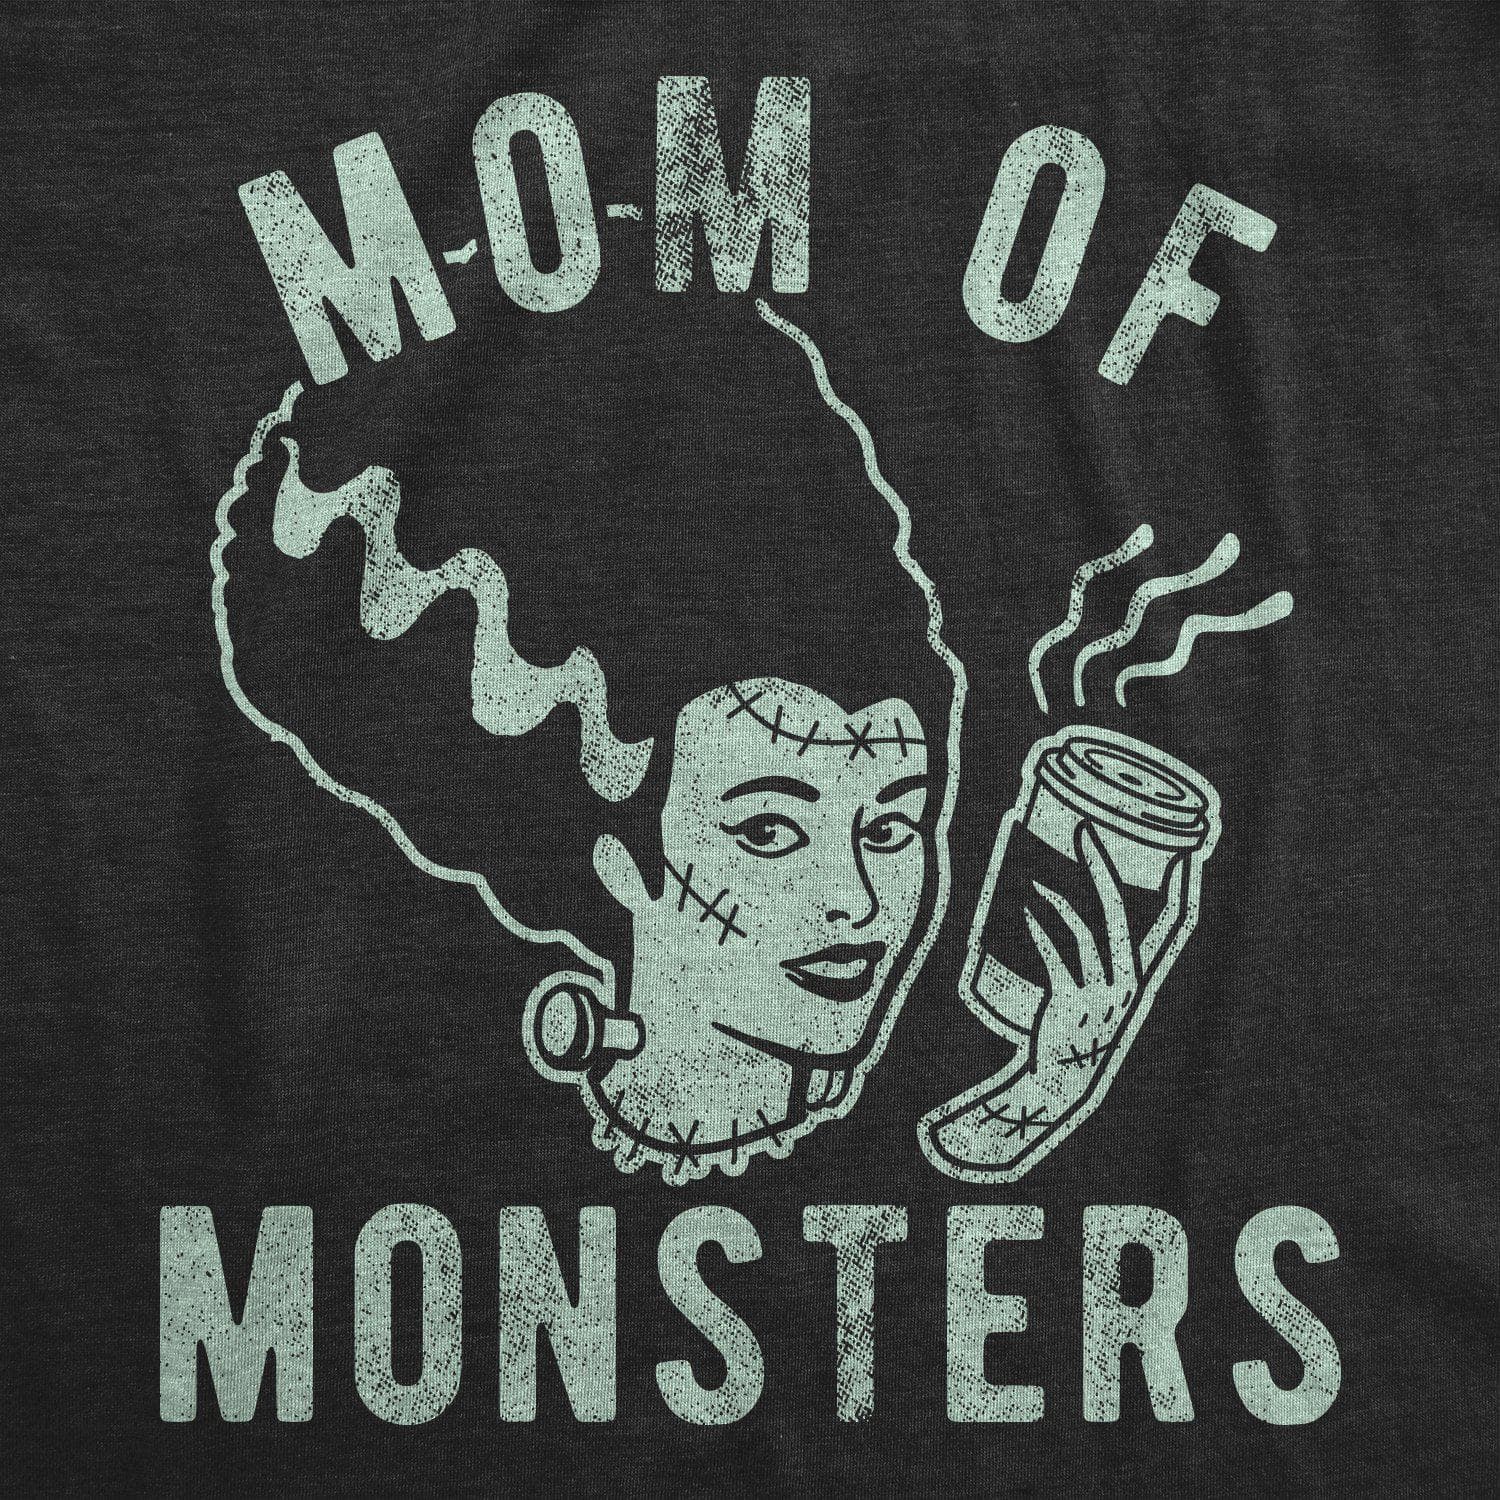 Mom Of Monsters Women's Tshirt - Crazy Dog T-Shirts